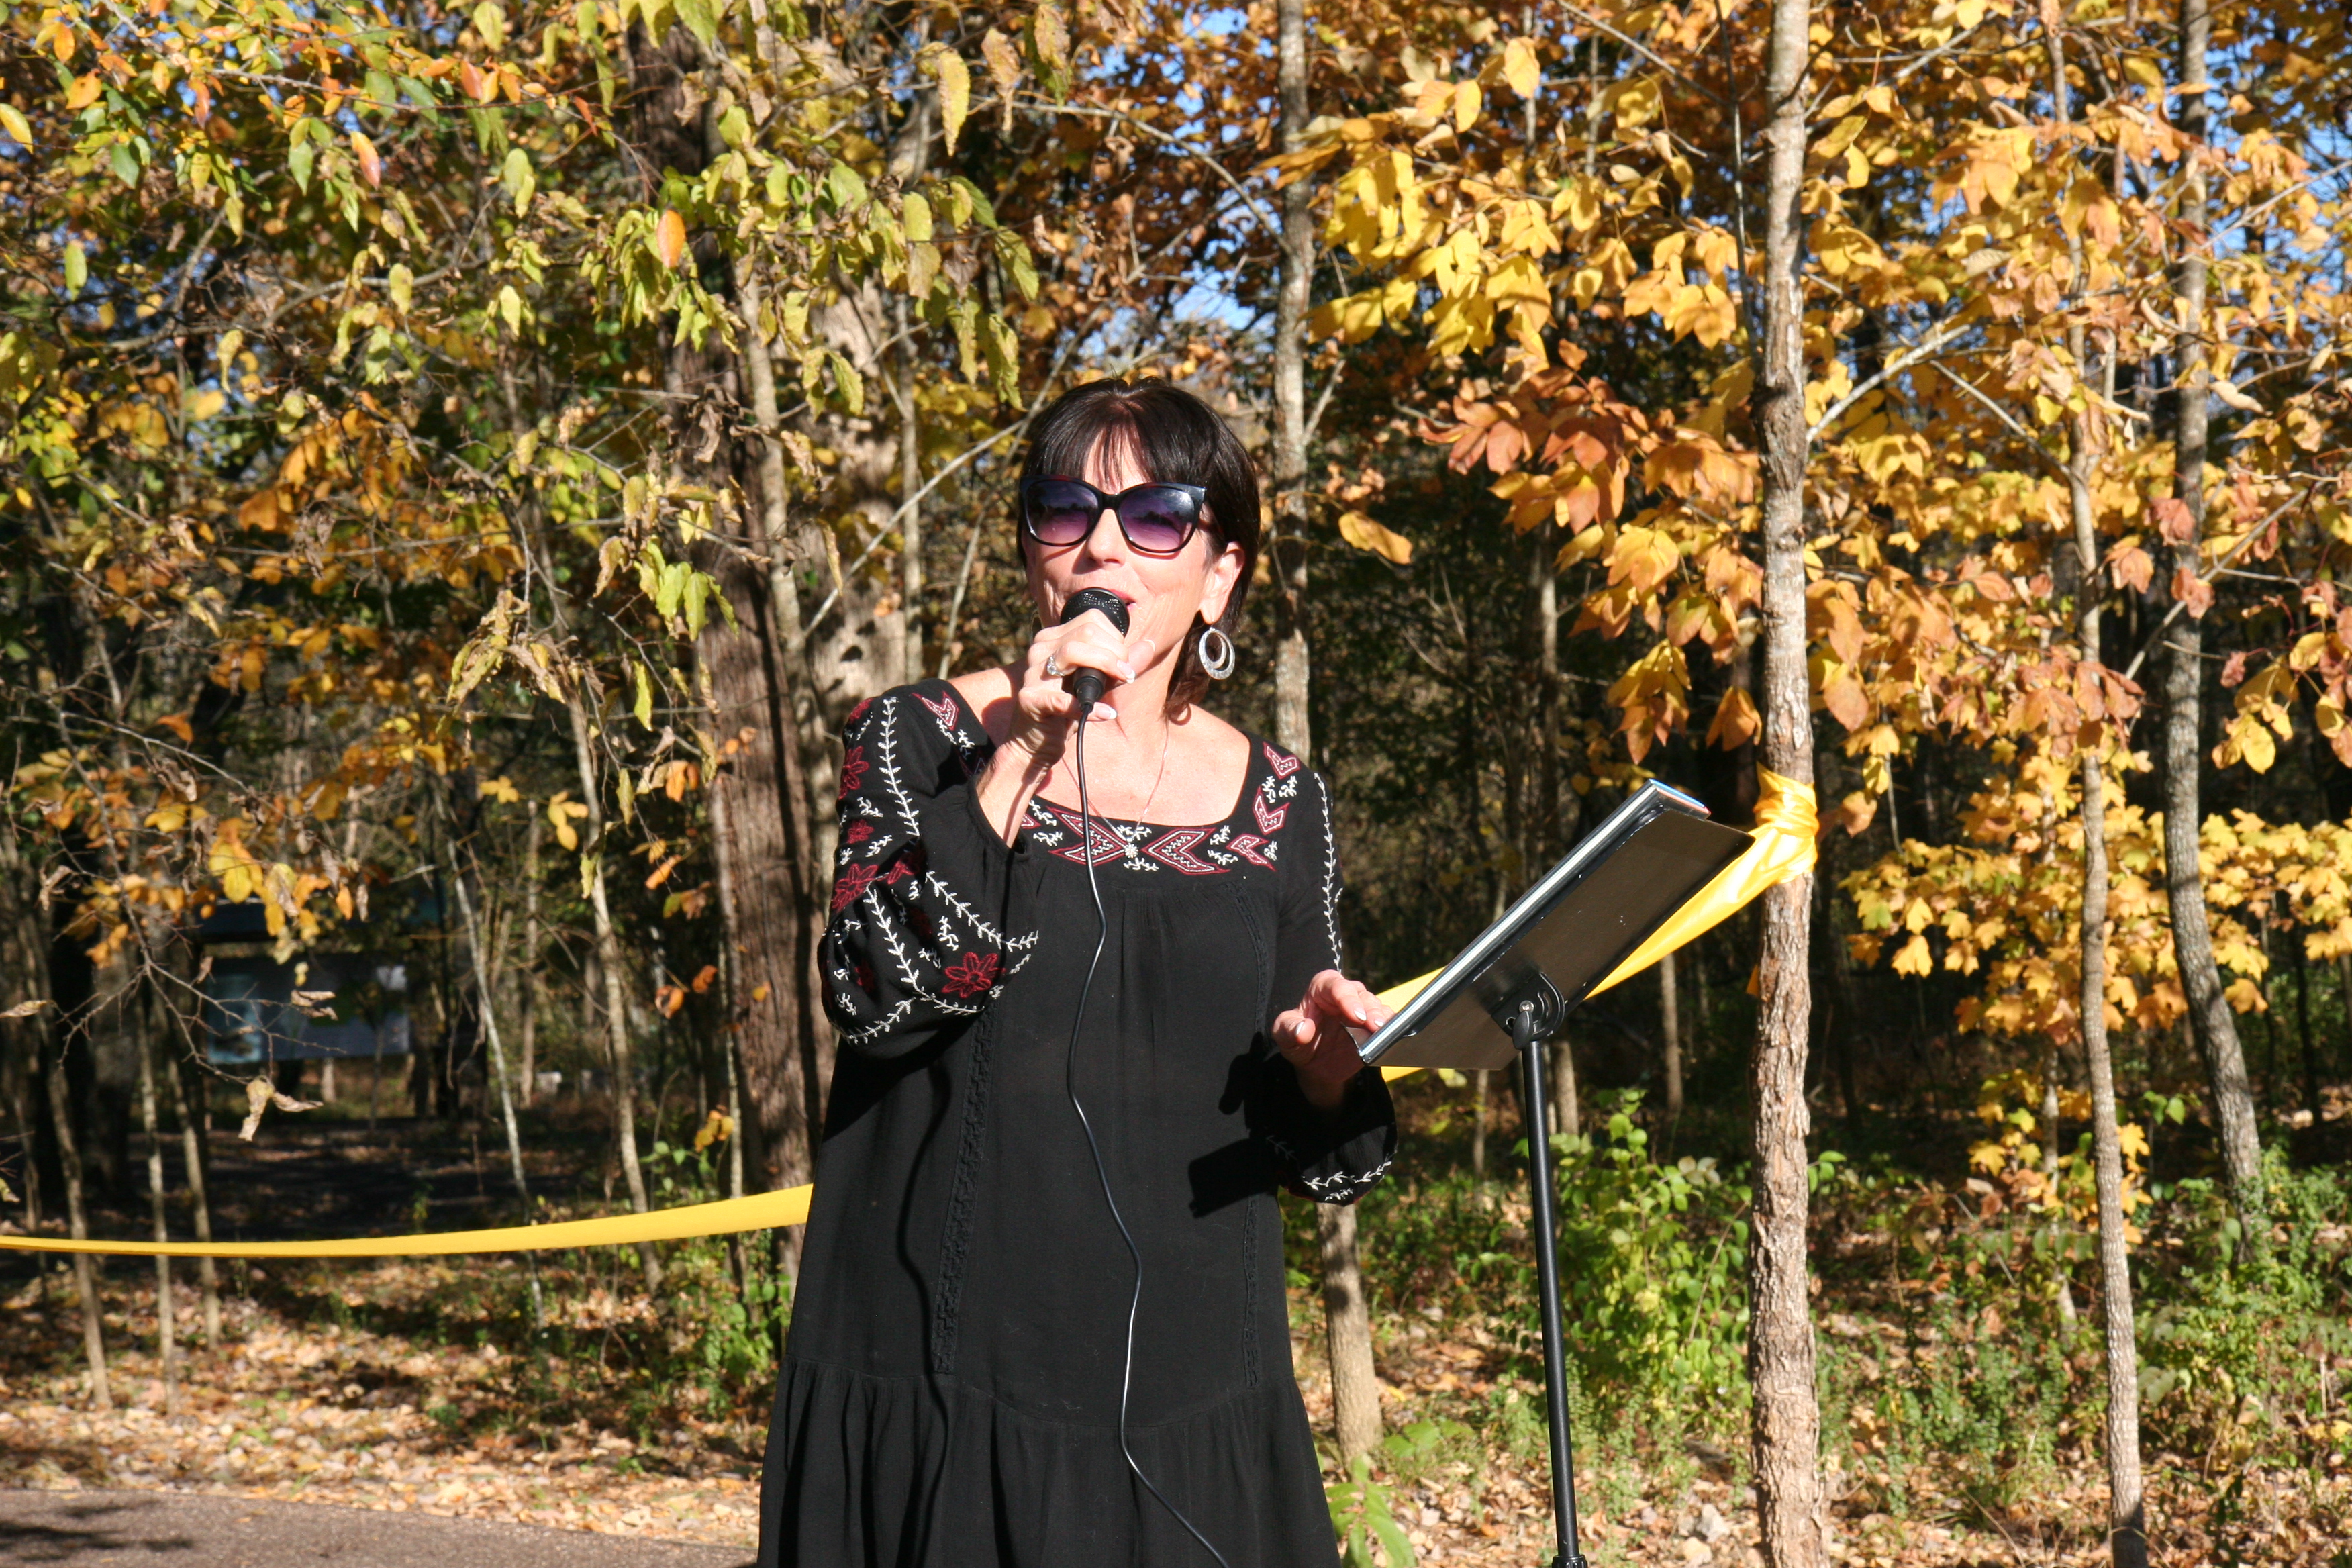 Carol Evans holding a microphone